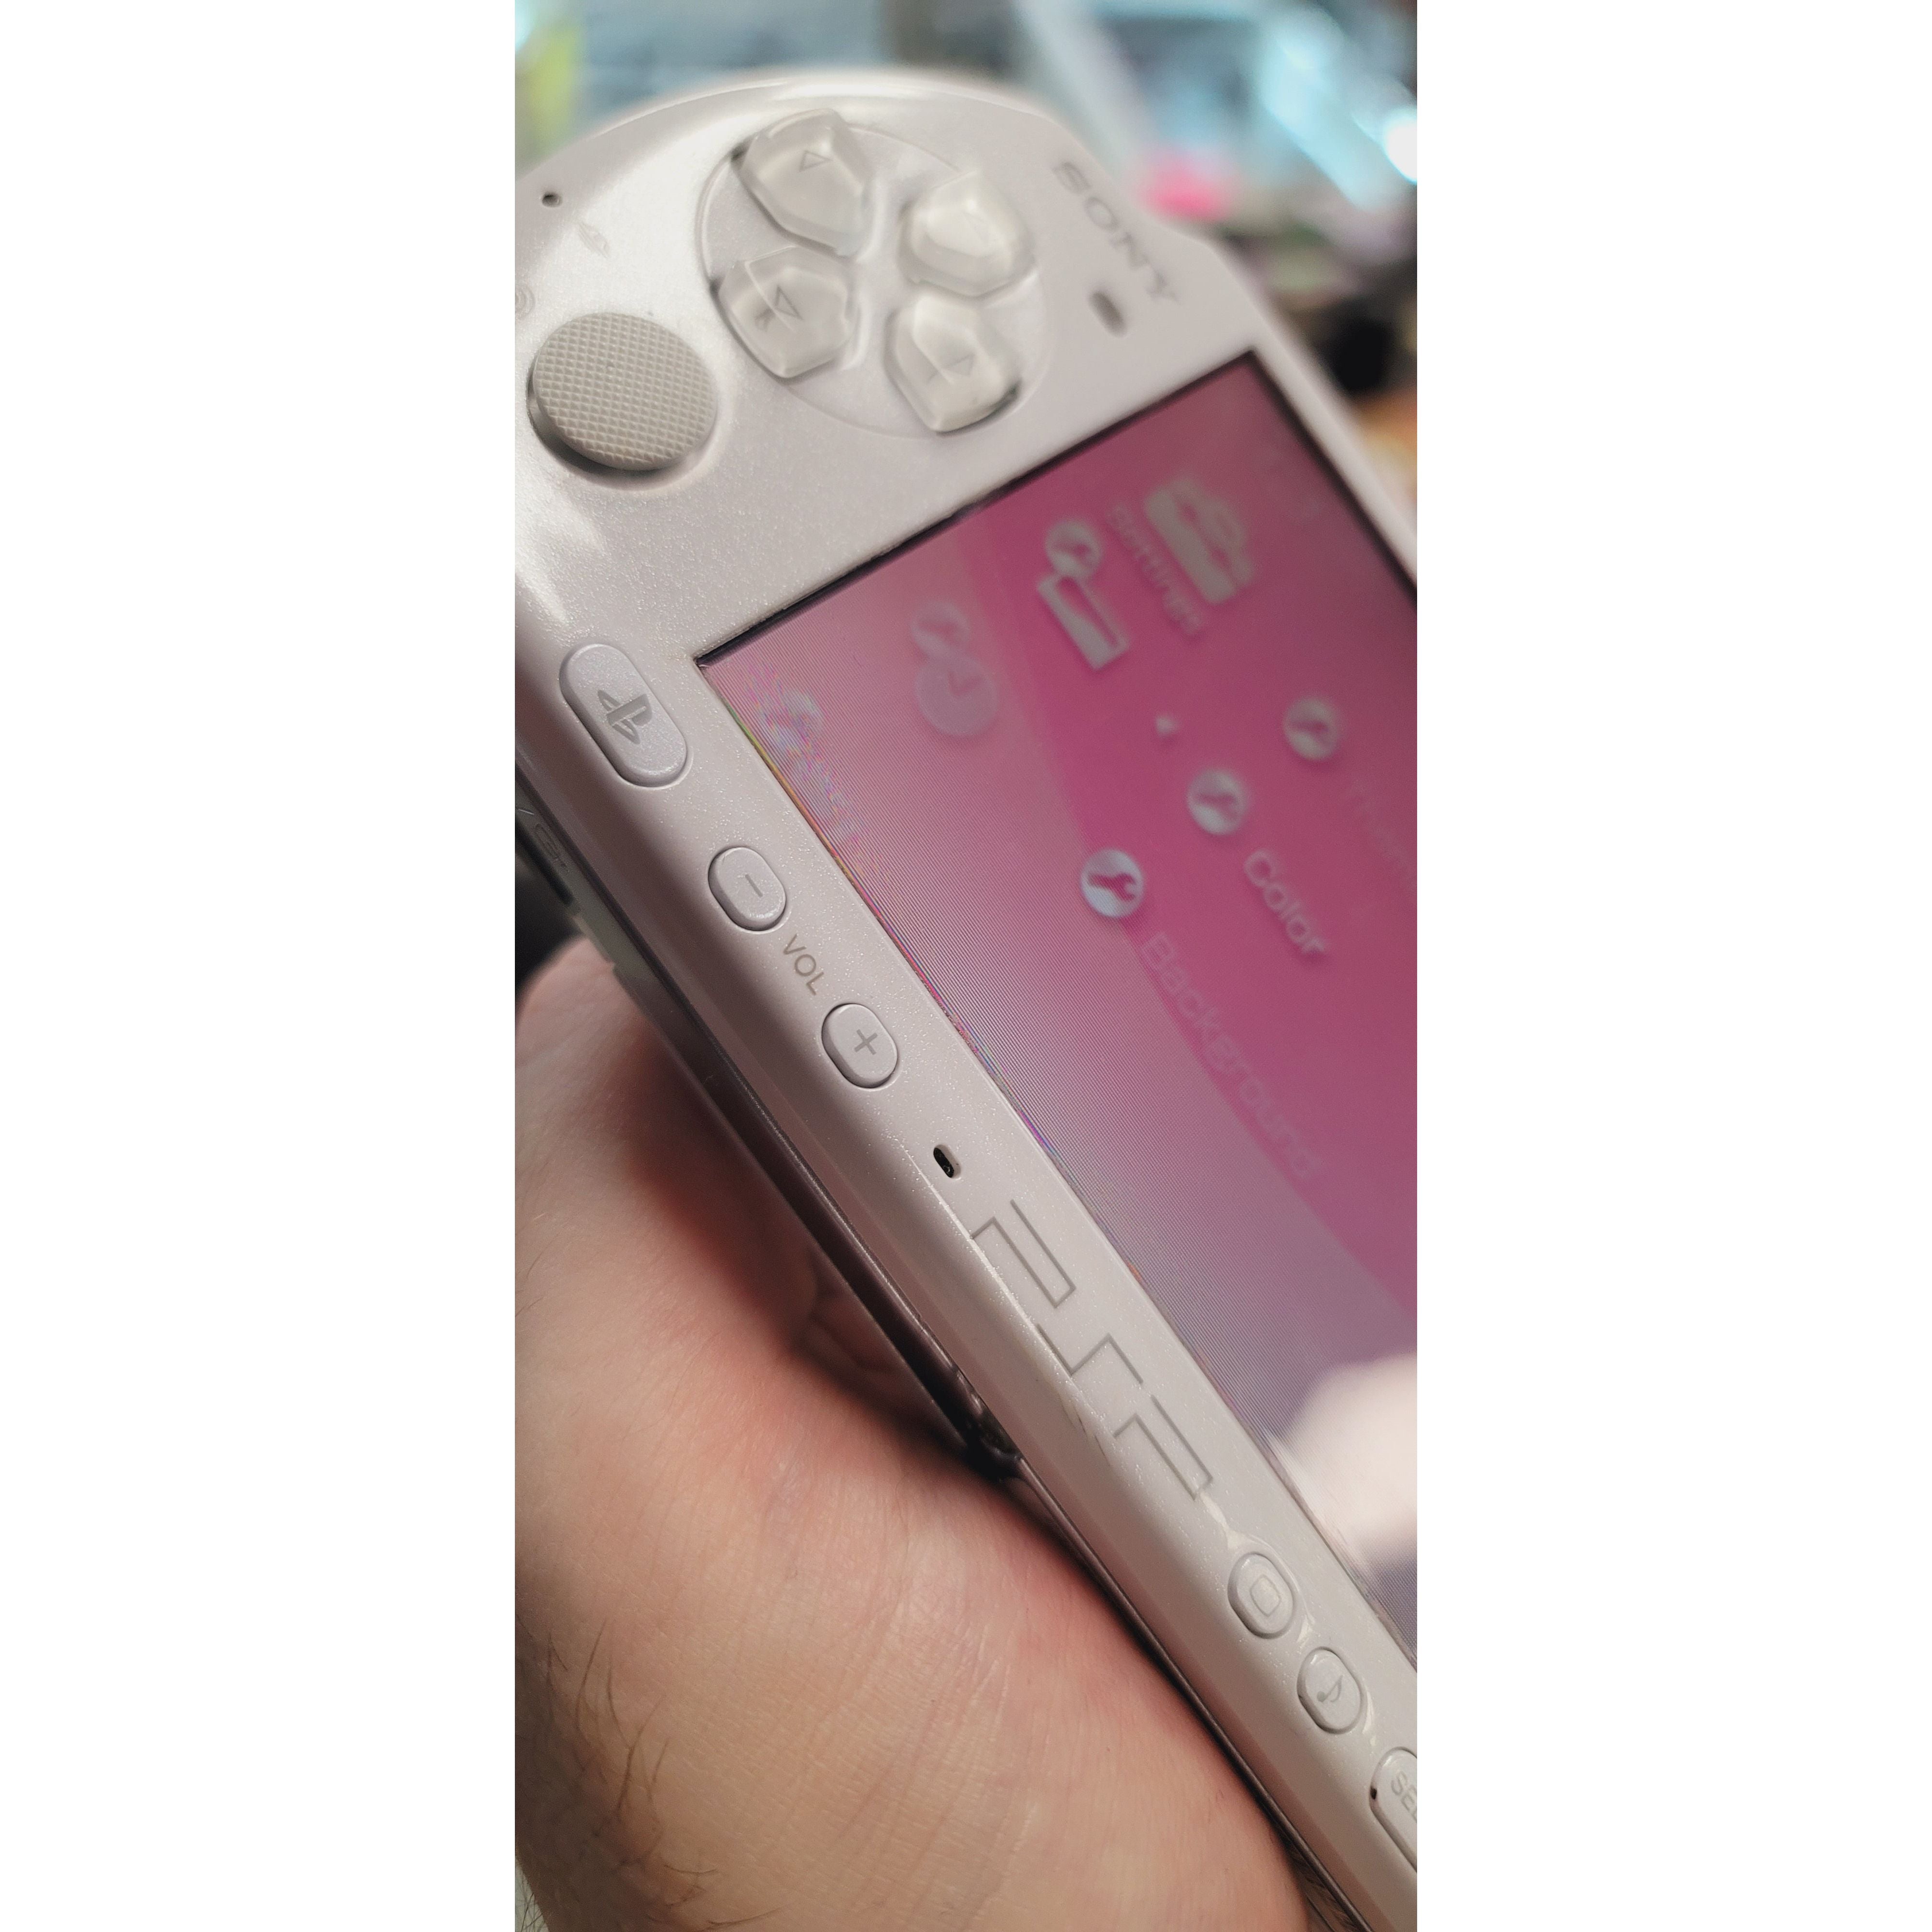 PSP System - Model 3000 (Pearl White / Minor Screen Damage)